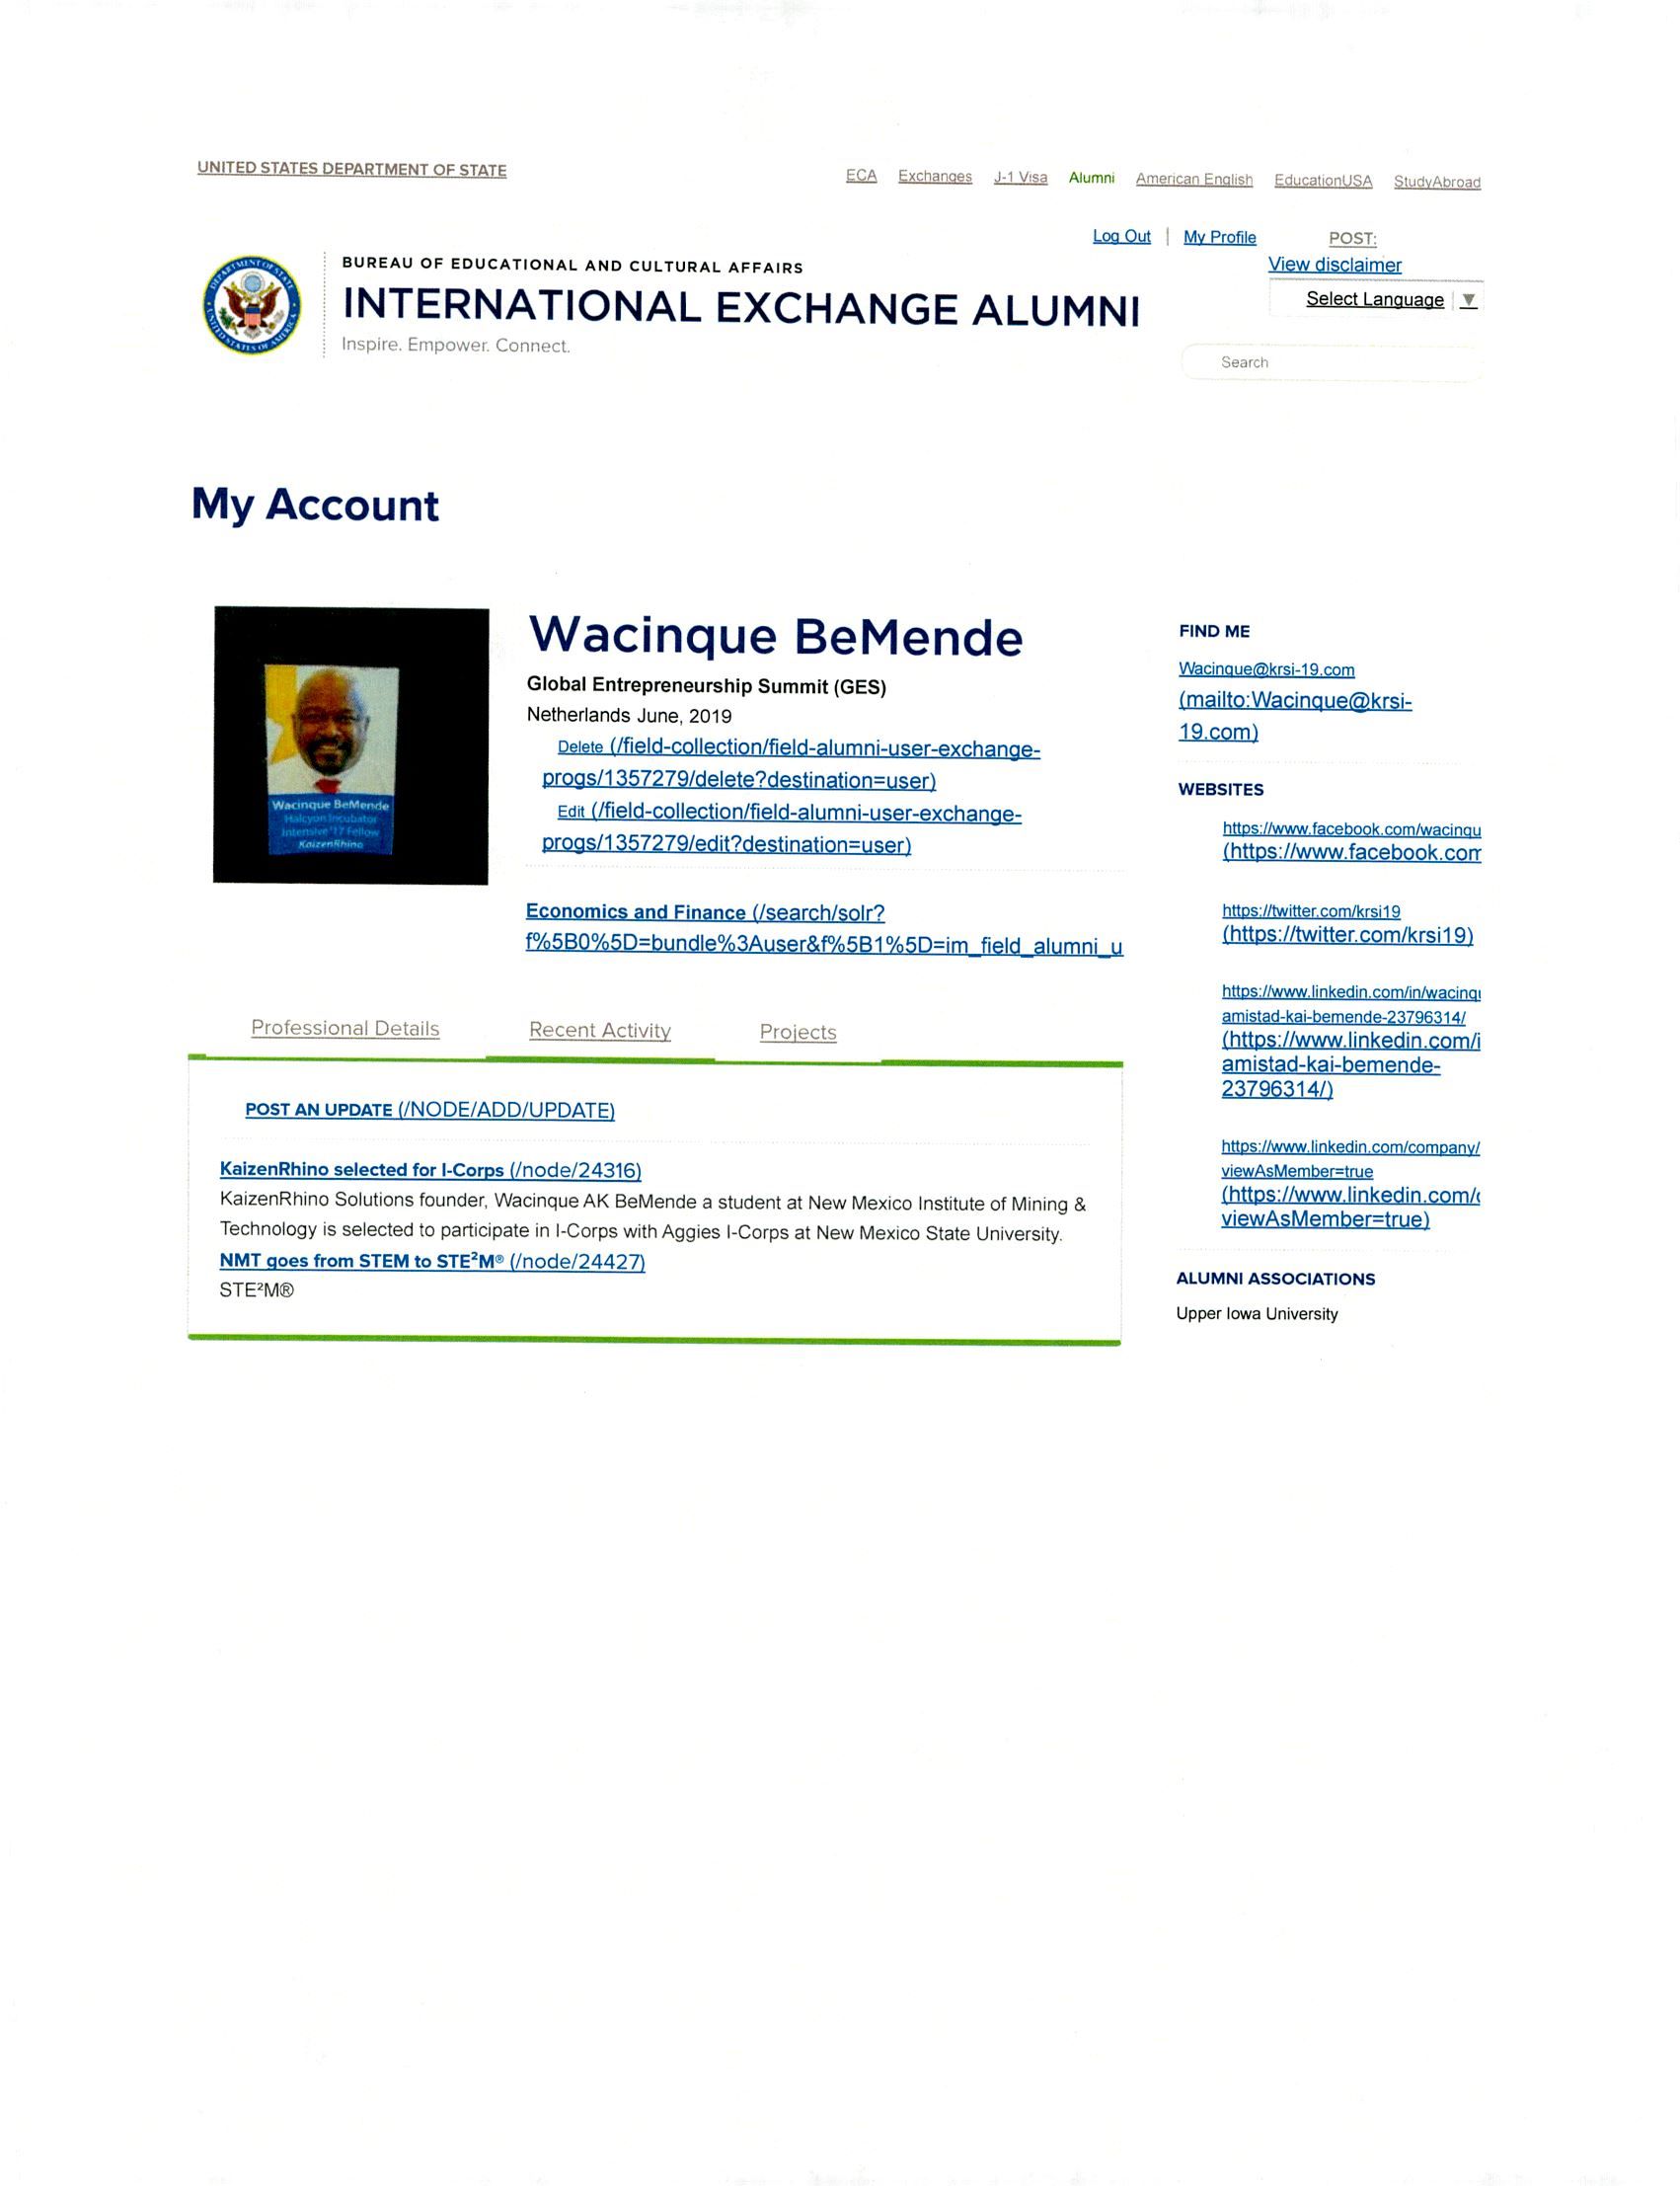 A picture of Wacinque's International Exchange Alumni account